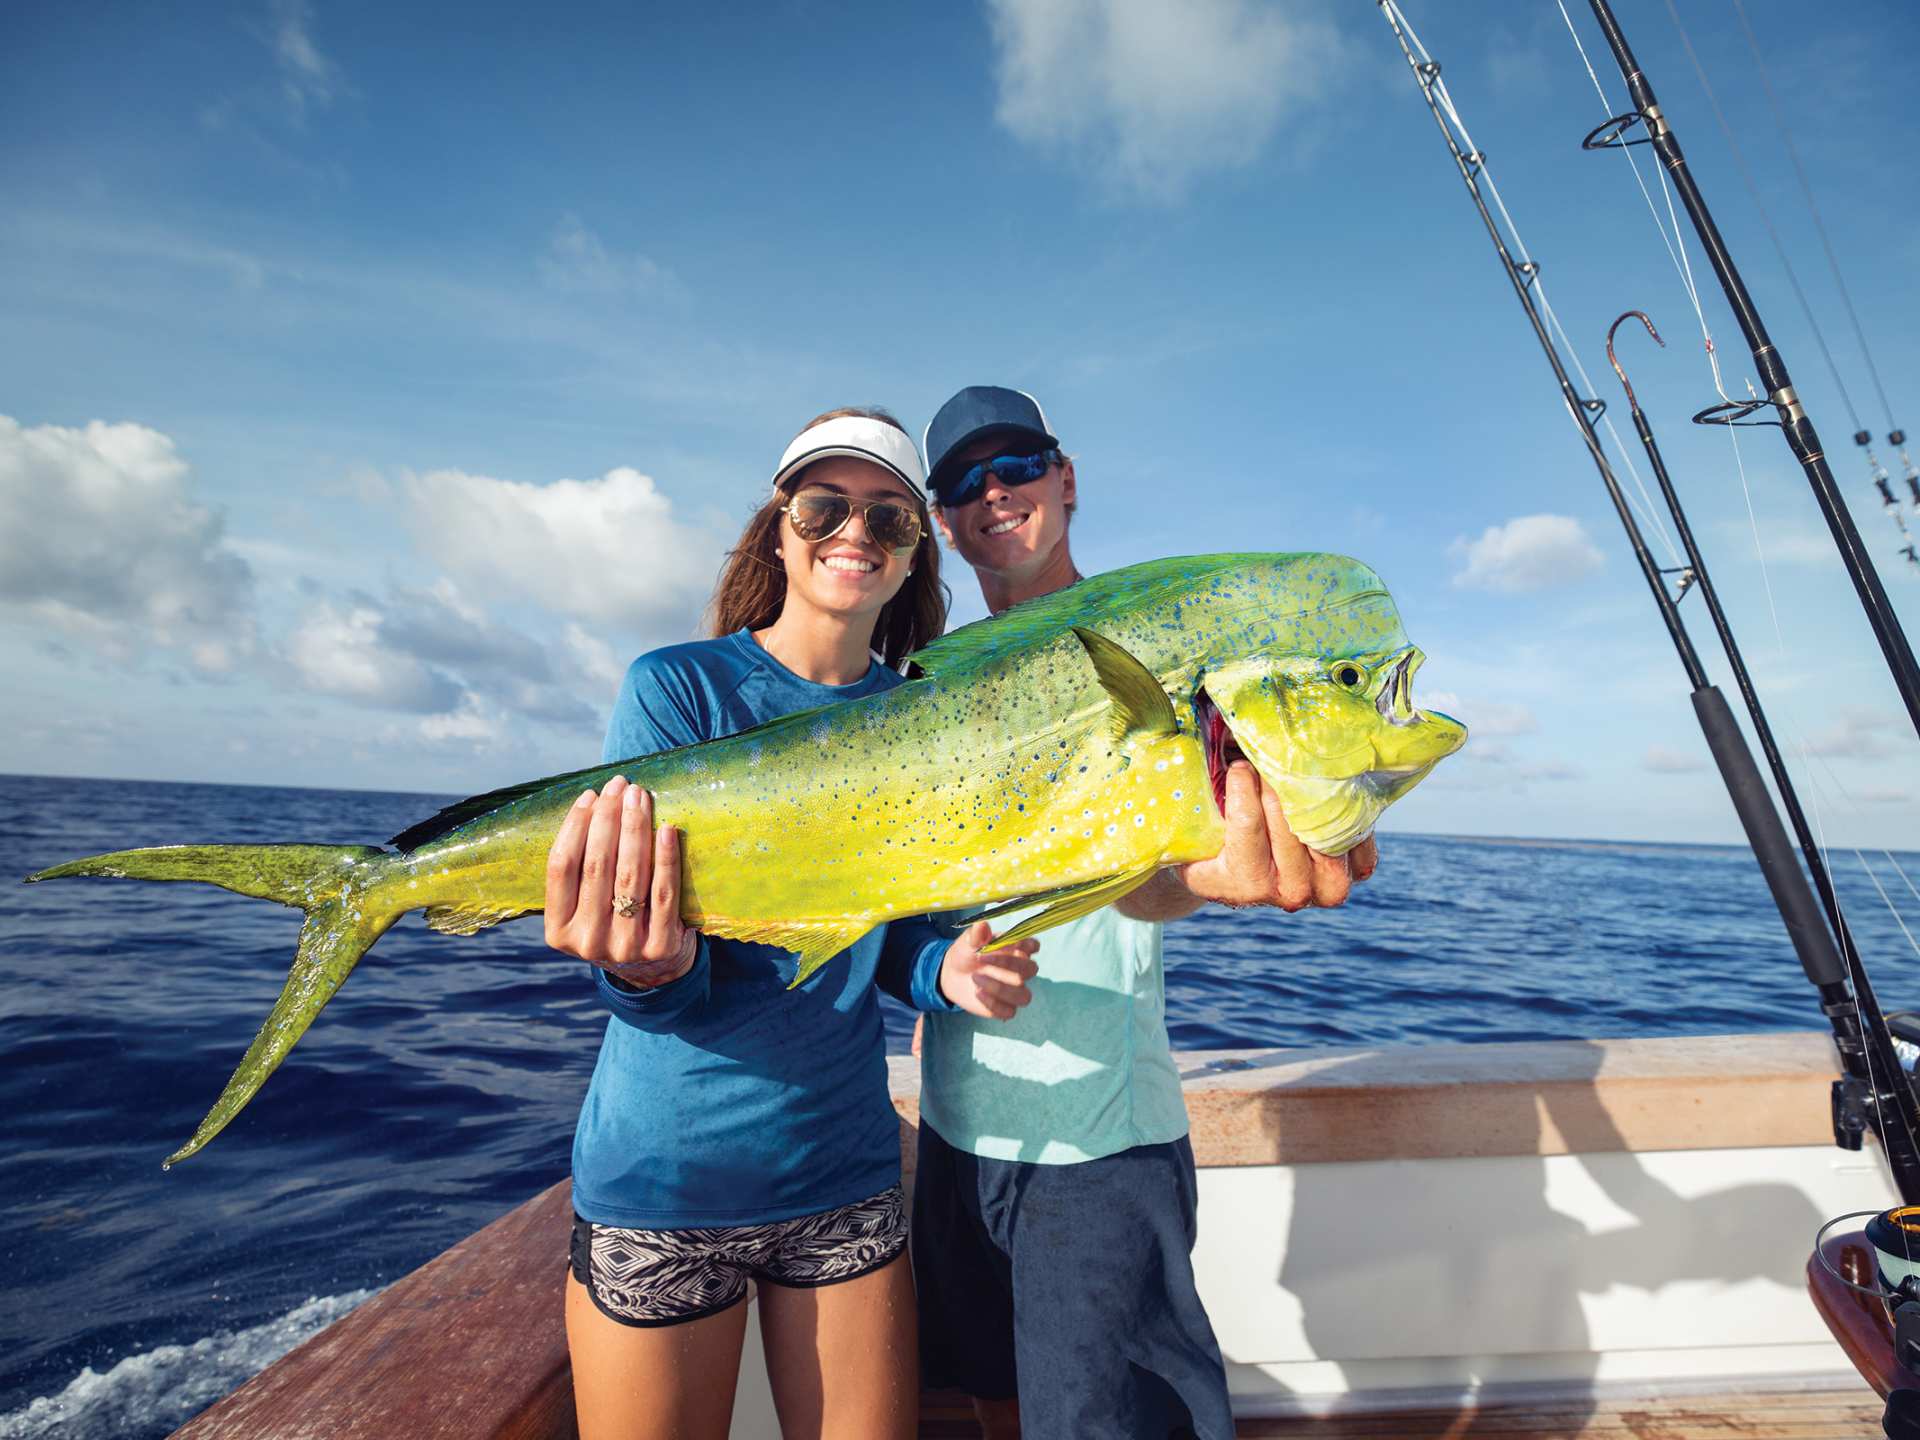 The Florida Keys | A couple fishing in Islamorada